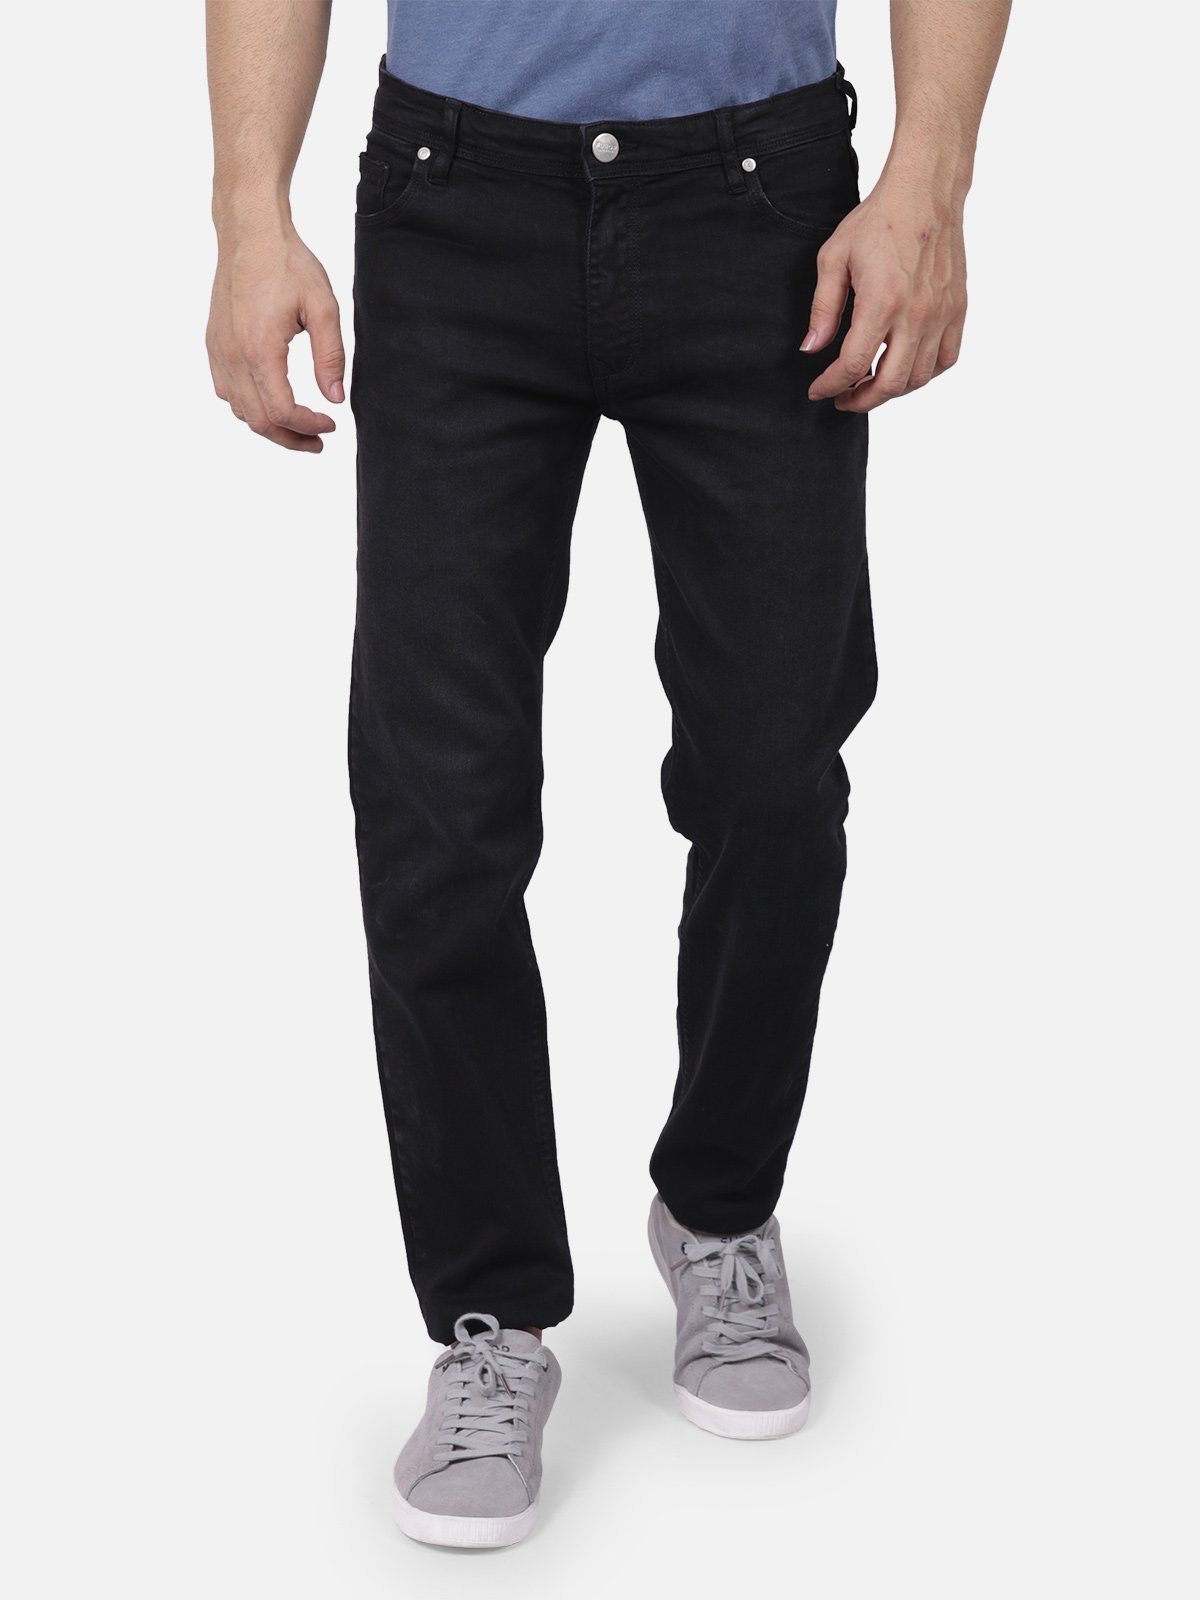 Men's Black Denim Jeans - FMBP18-055